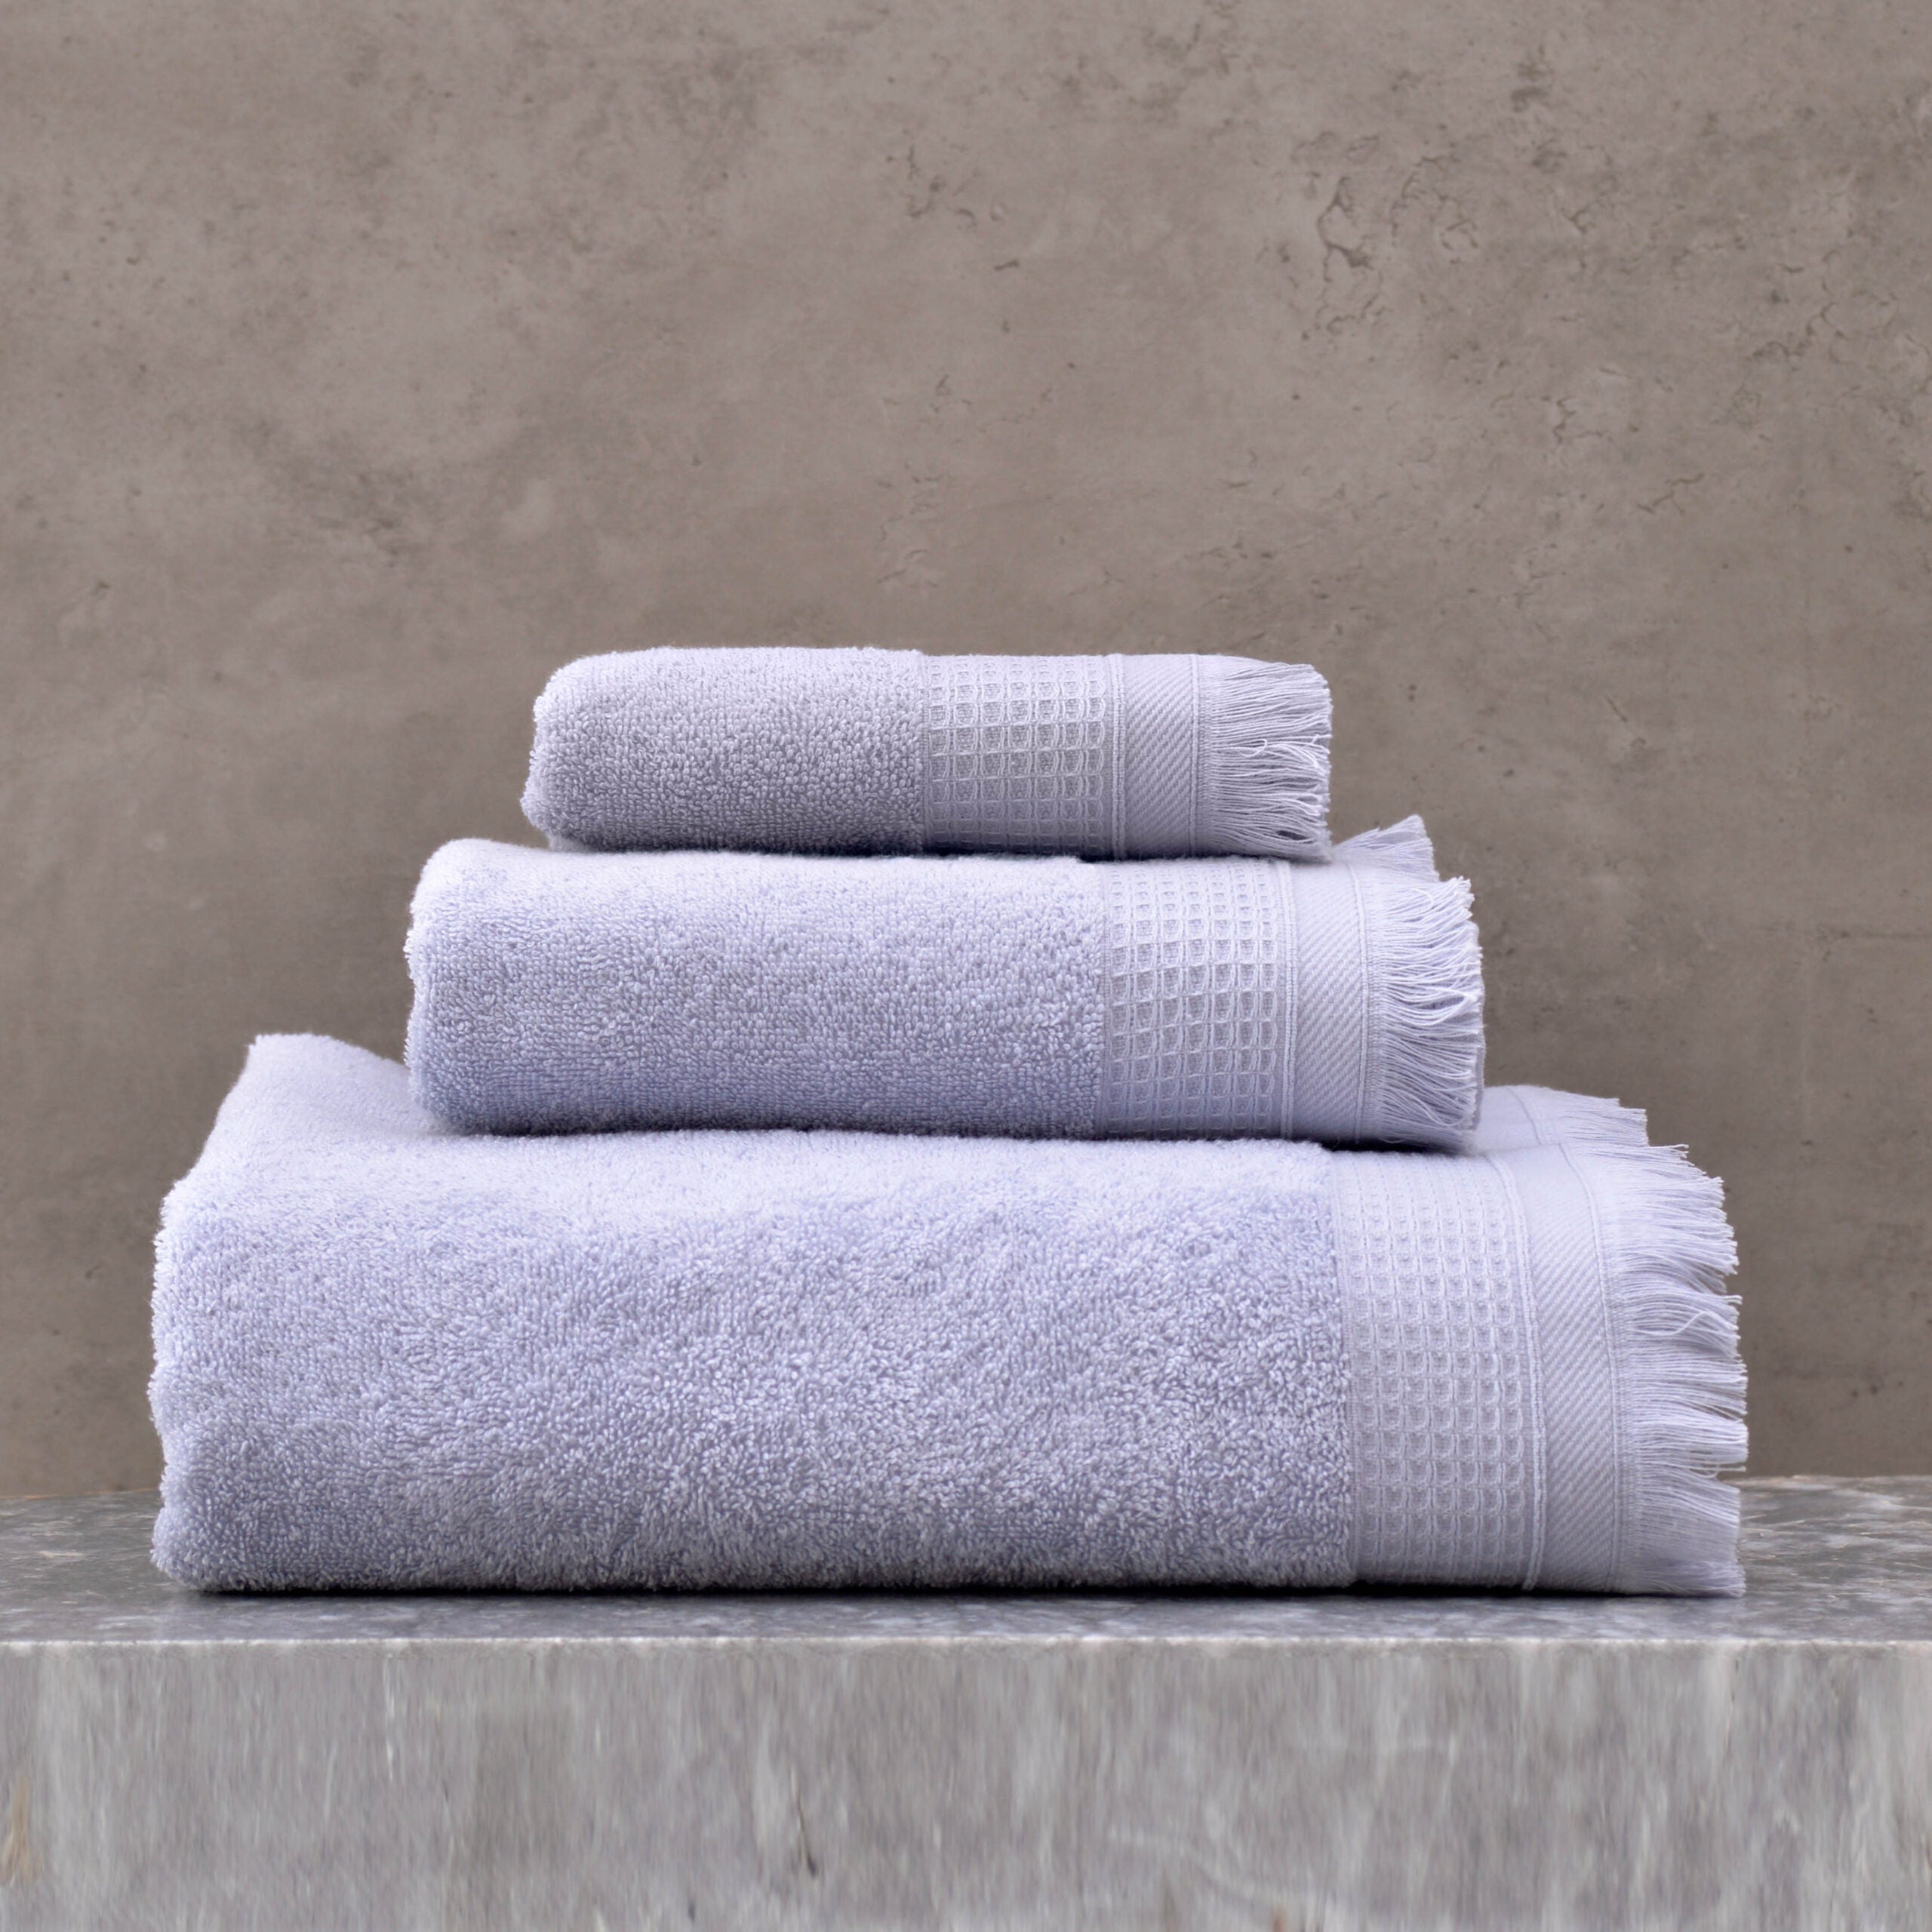 TANNY - Σετ πετσέτες 3 τεμ. Μπλε 30 x 50, 50 x 90, 70 x 140 από την εταιρεία Rythmos Home